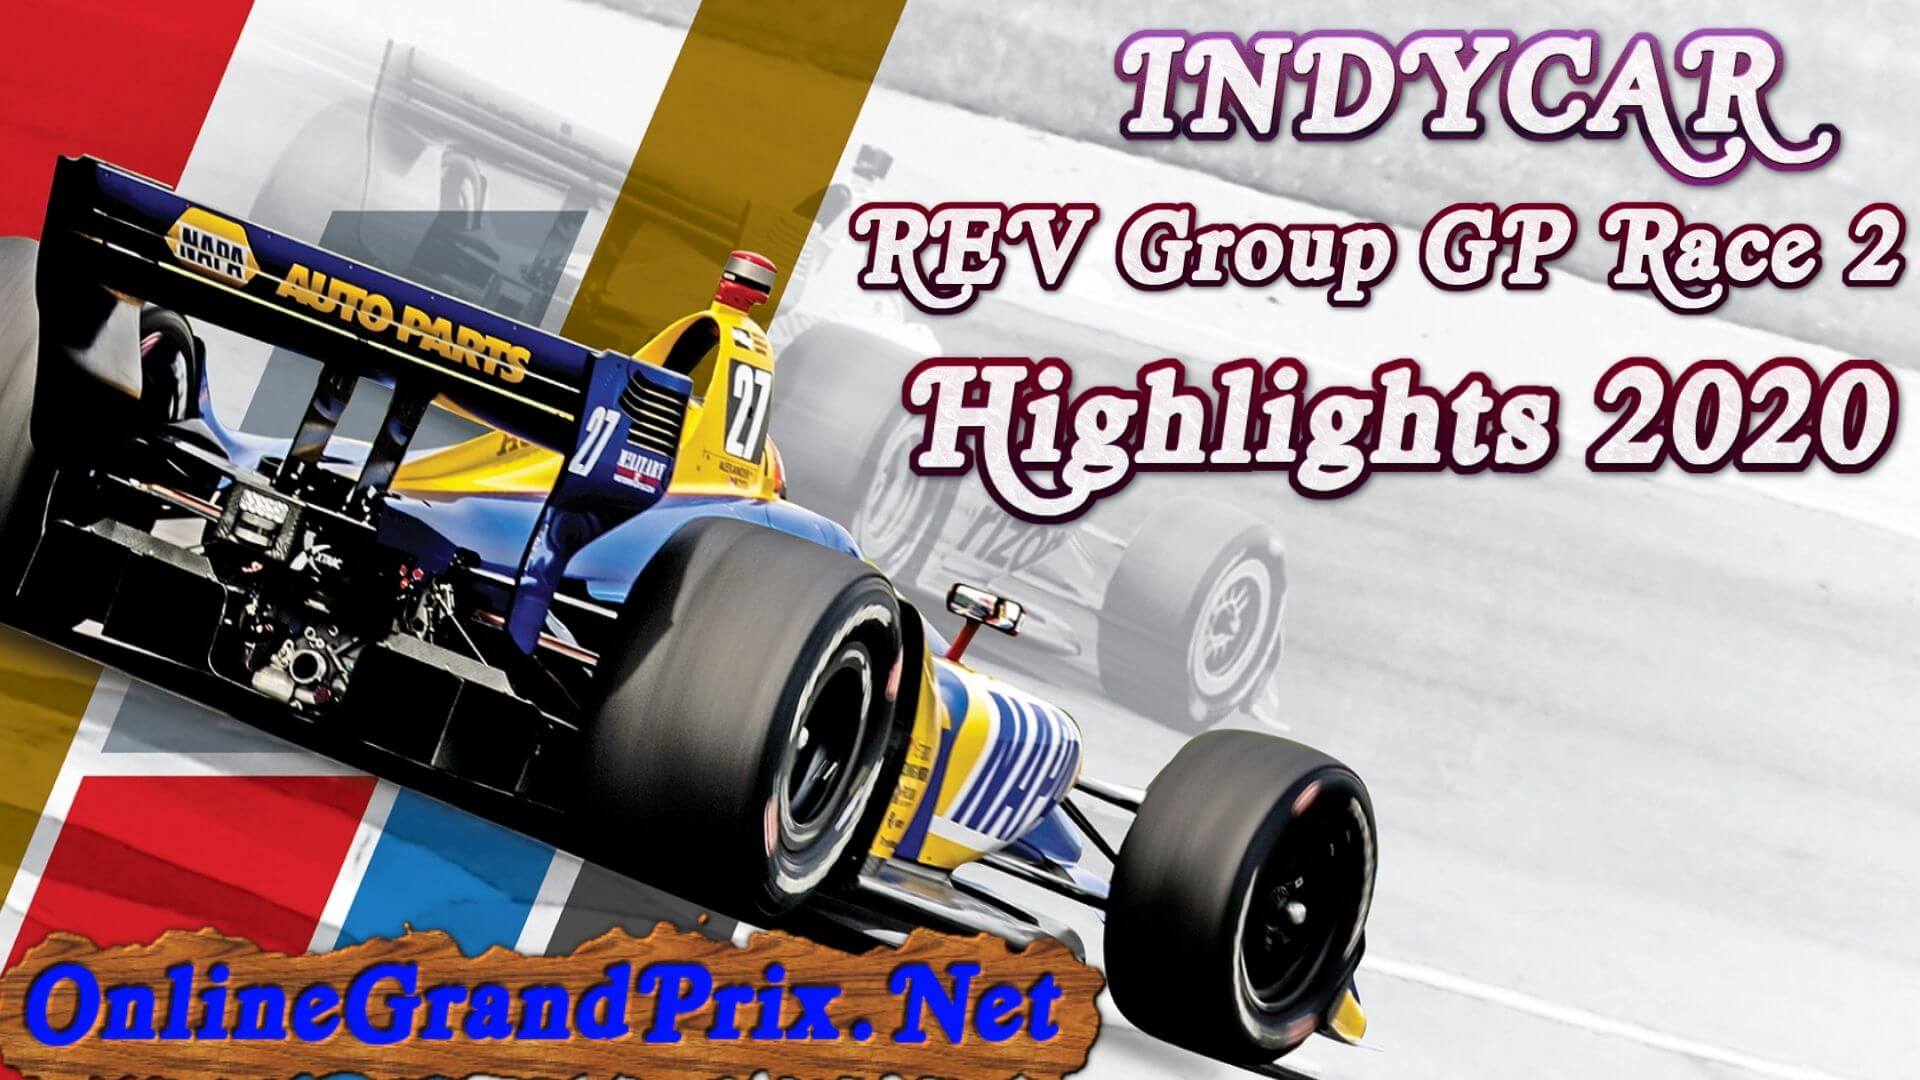 REV Group Grand Prix Race 2 Highlights INDYCAR 2020